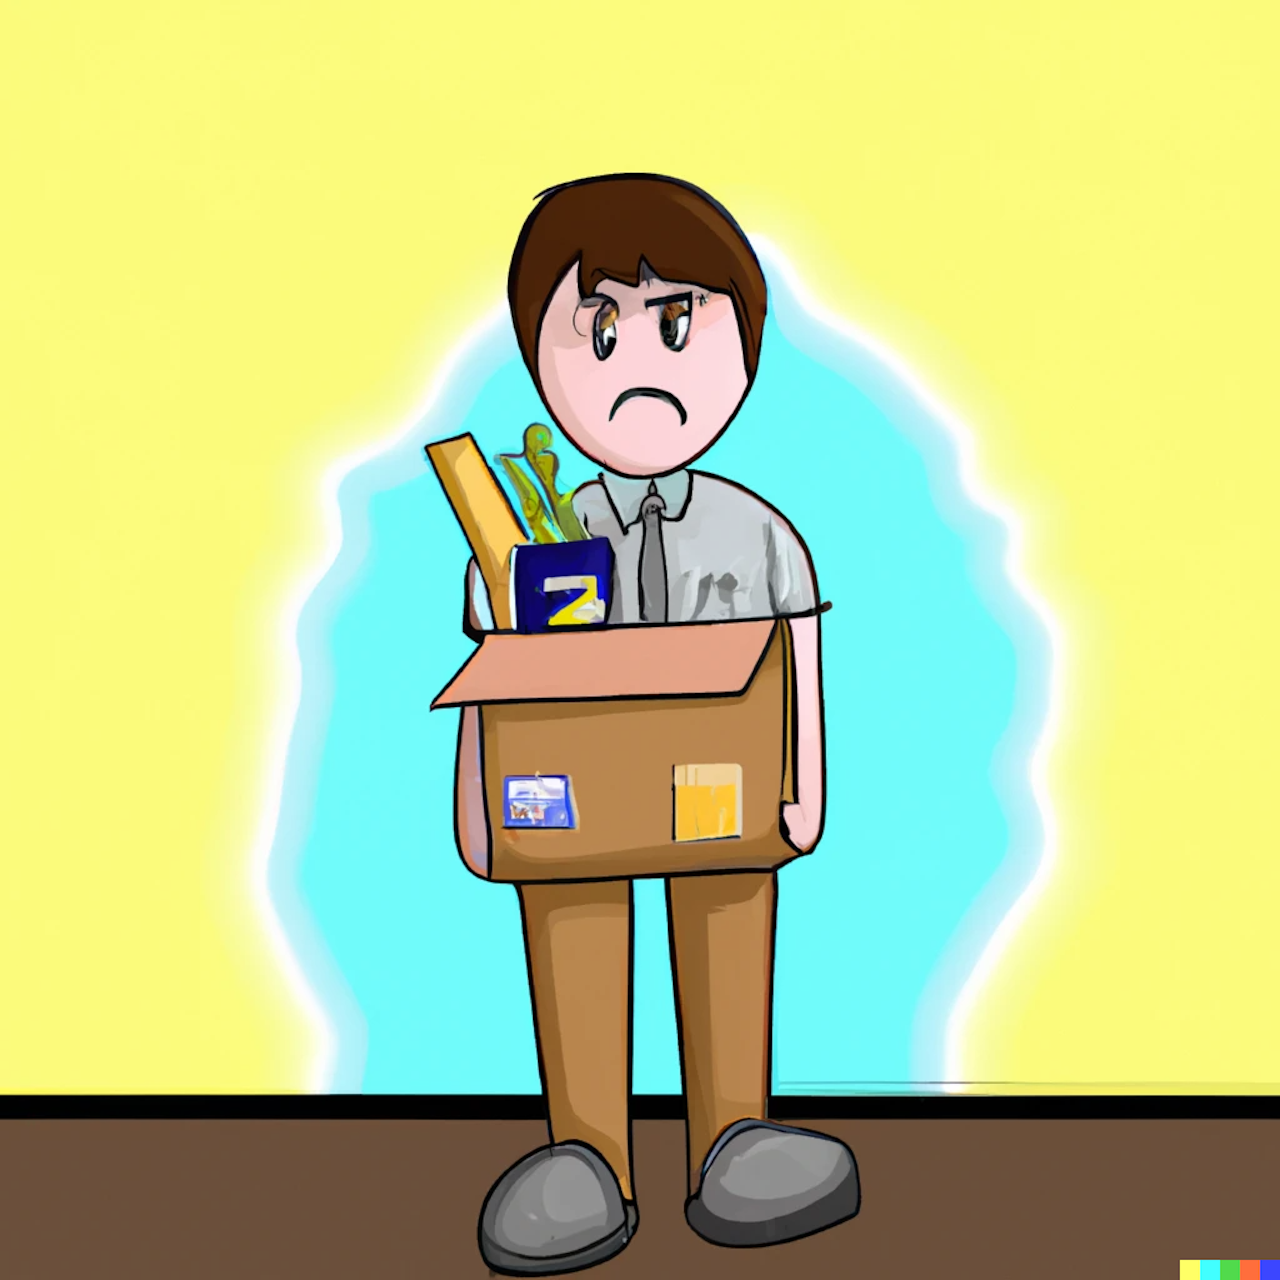 A cartoon of a sad person with a cardboard box